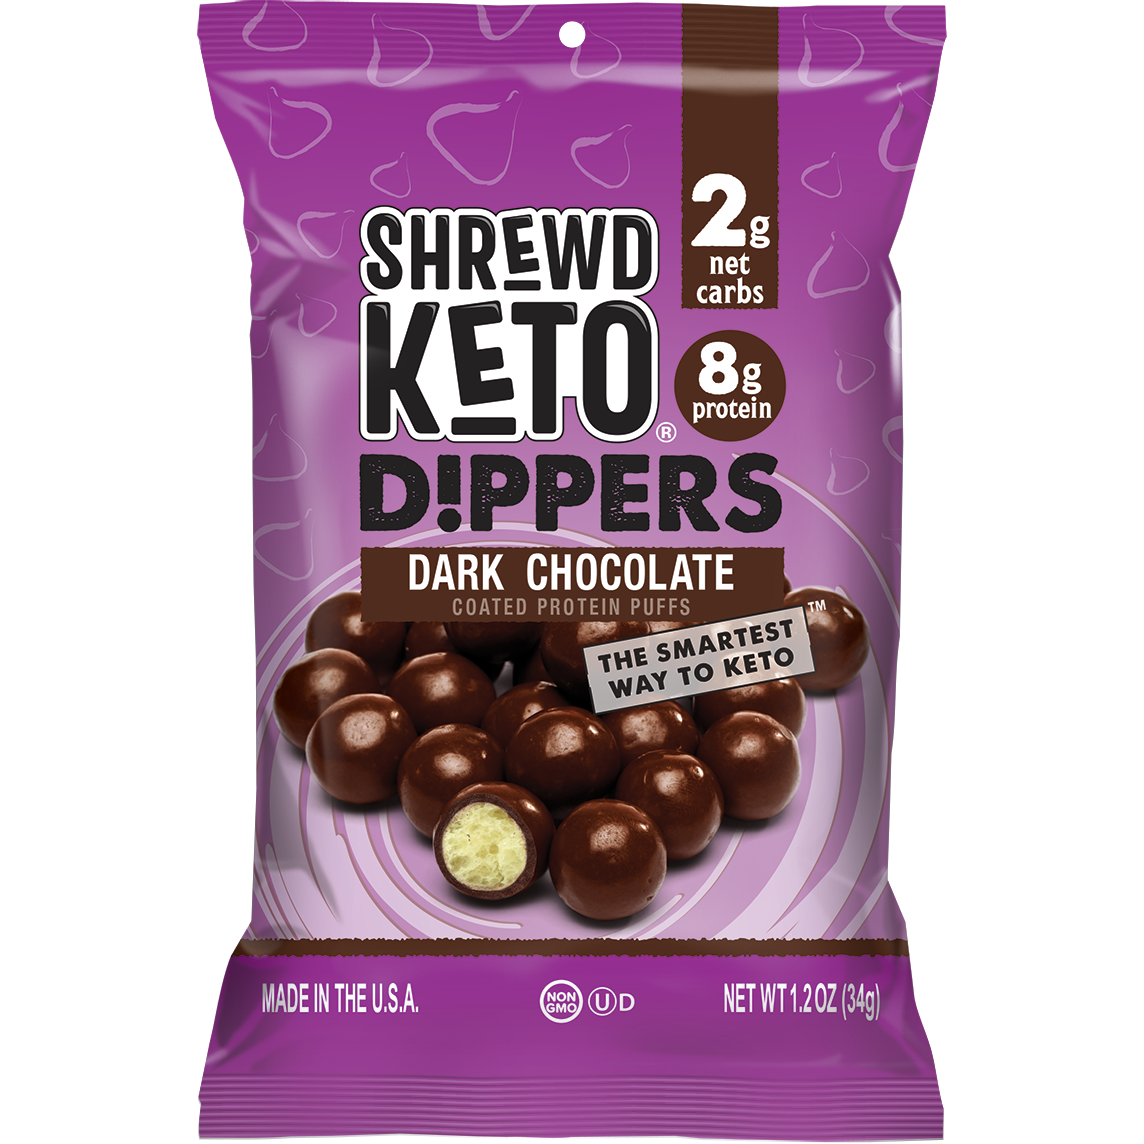 Shrewd - Keto Dippers - Chocolat noir - Sac de 1,2 oz